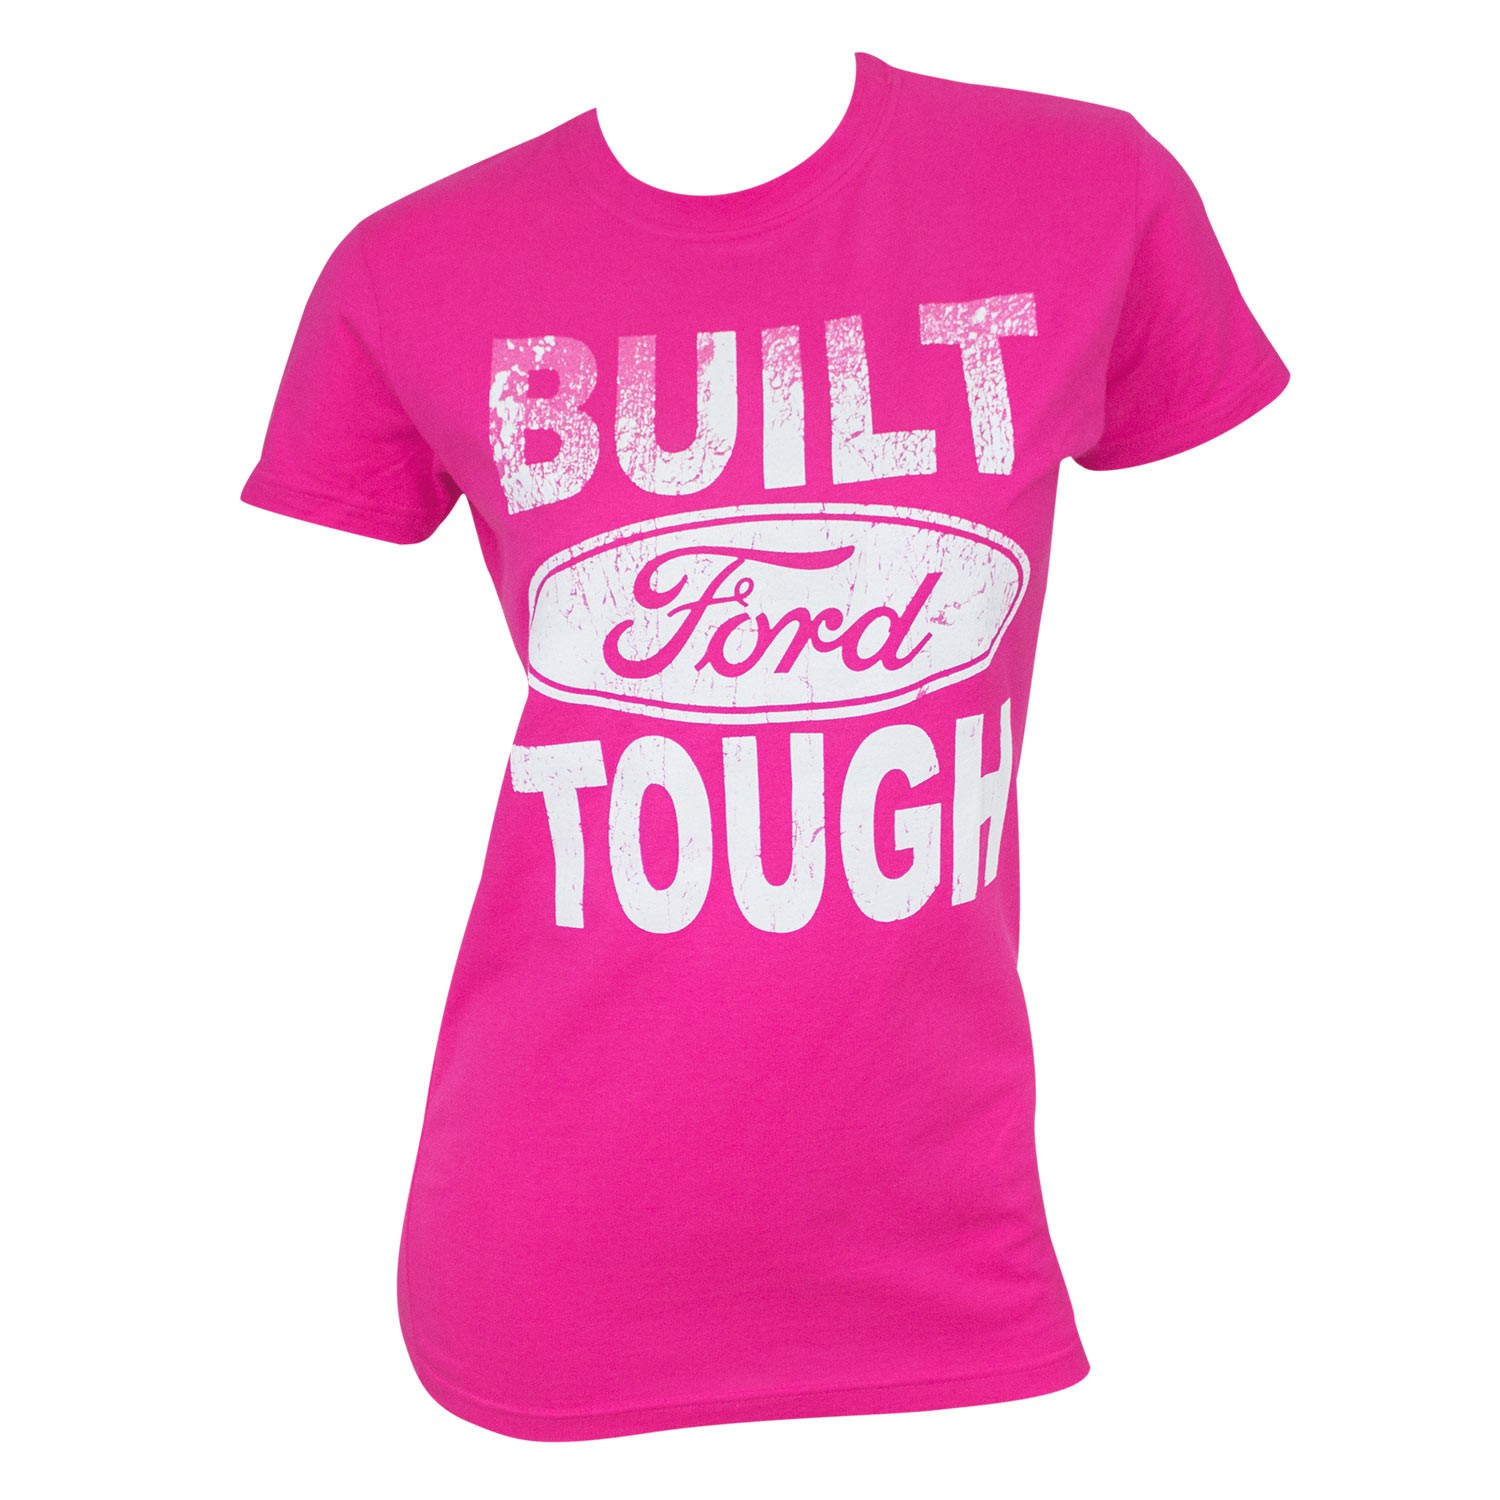 FORD! Built Tough.   Built ford tough, Ford logo, Tough